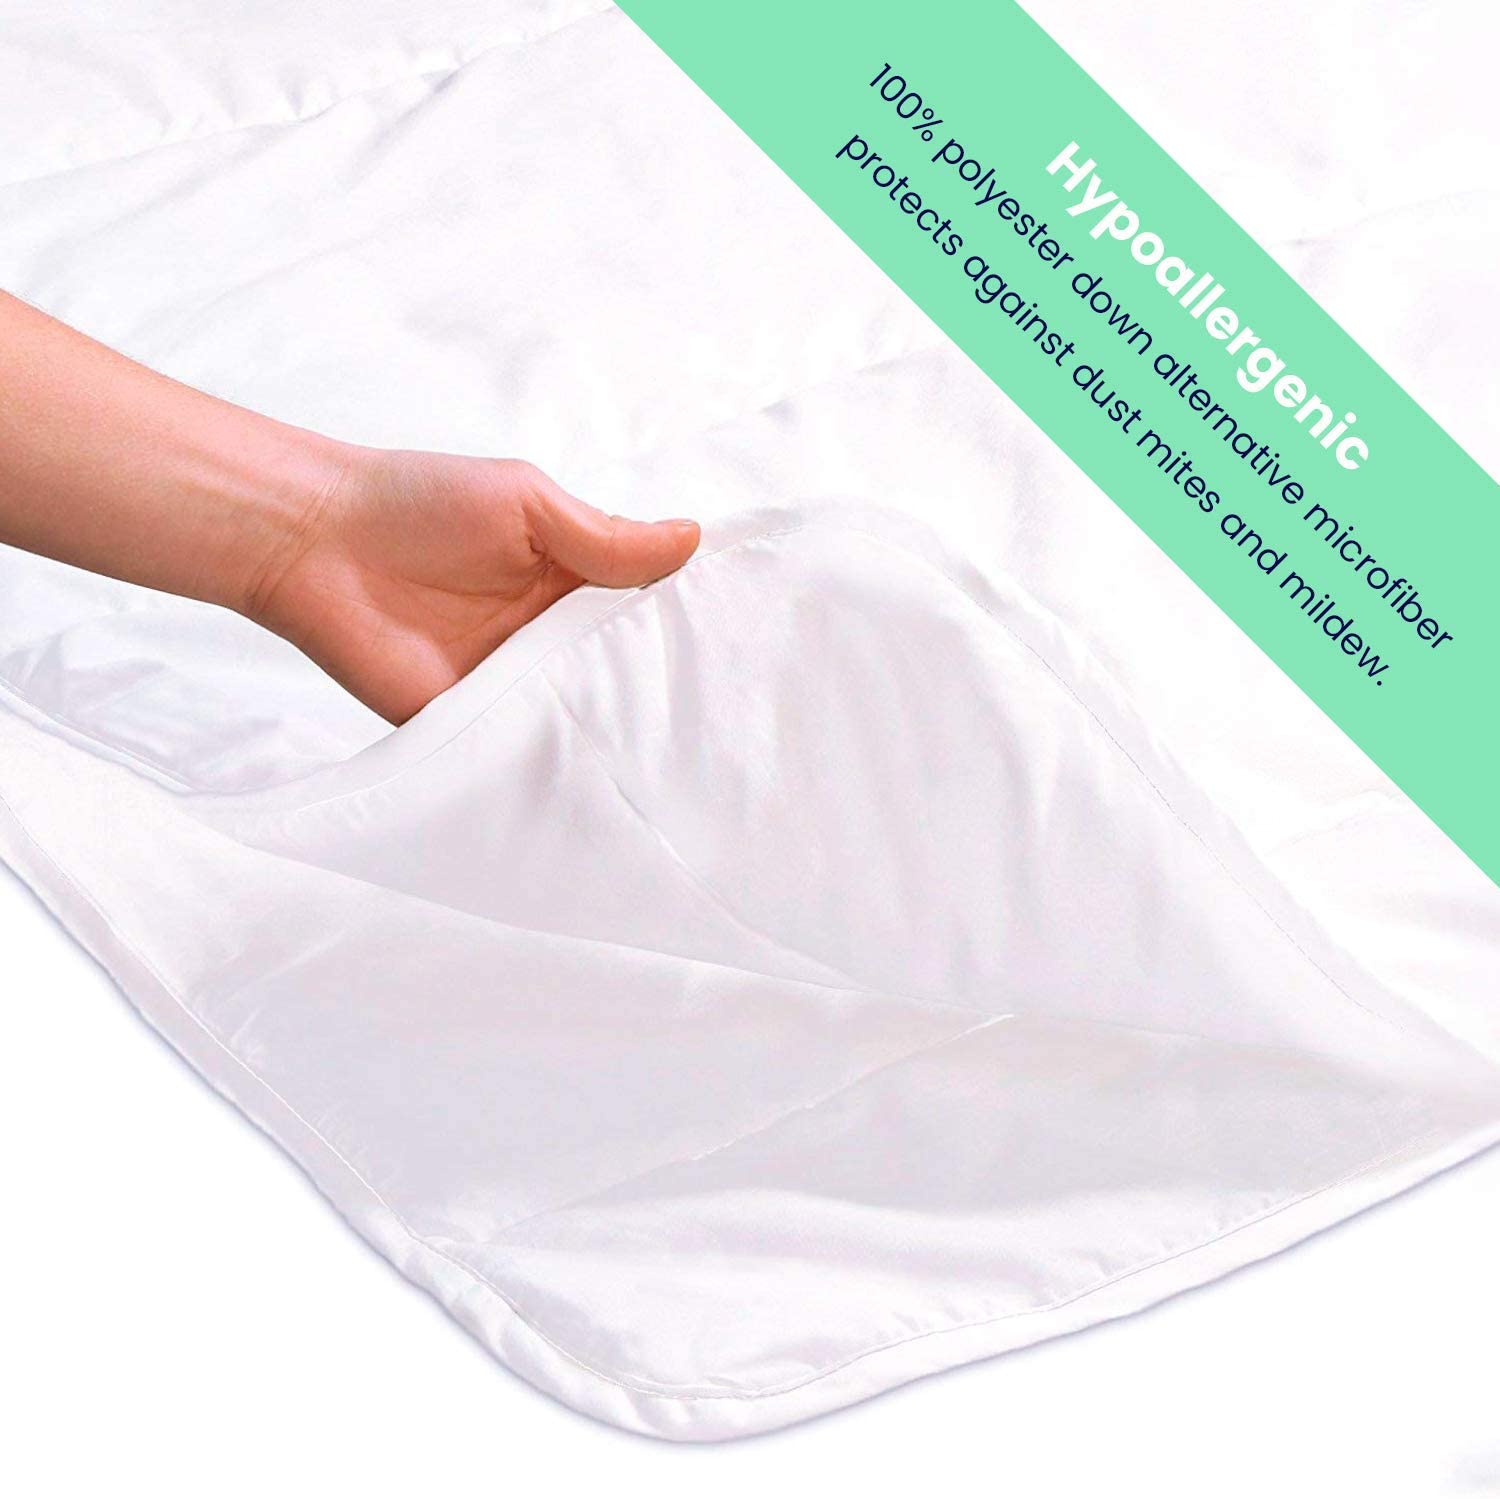 Celeep Thin Duvet Insert (86"x 86") - White, All Season Down Alternative Comforter Insert, Soft, Plush Microfiber Fill, Machine Washable, Queen Size - image 2 of 7